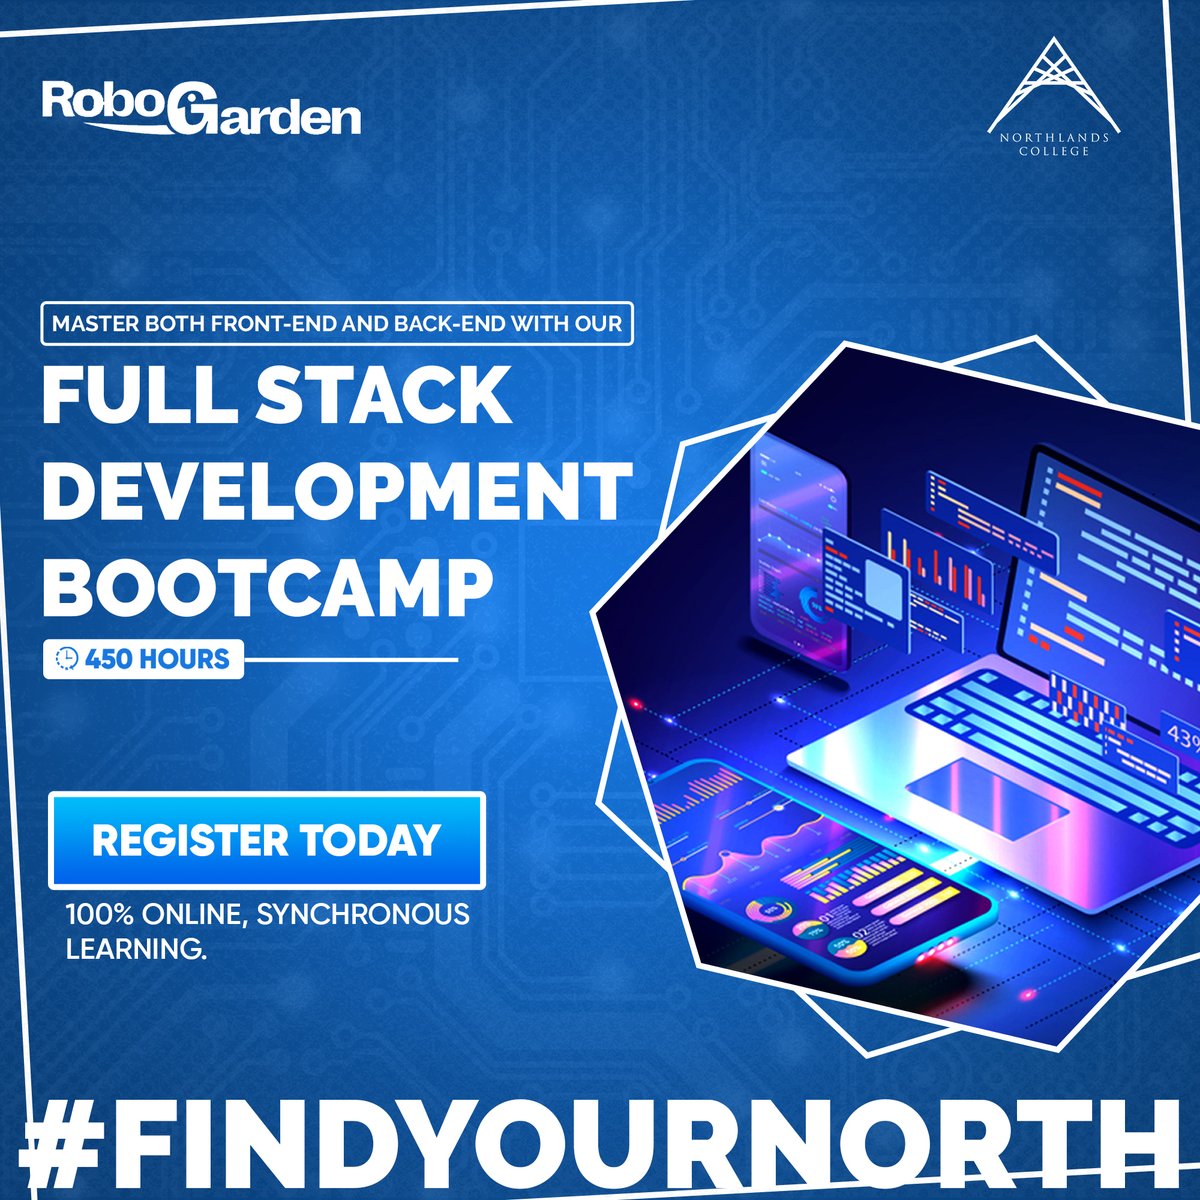 @NorthlandsColg in collaboration with @RoboGardenInc is now introducing a Full Stack Development Bootcamp.

Register below and kickstart your tech journey:
northlandscollege.robogarden.ca

#northlandscollege #TechSkills #frontenddeveloper #backenddeveloper #findyournorth